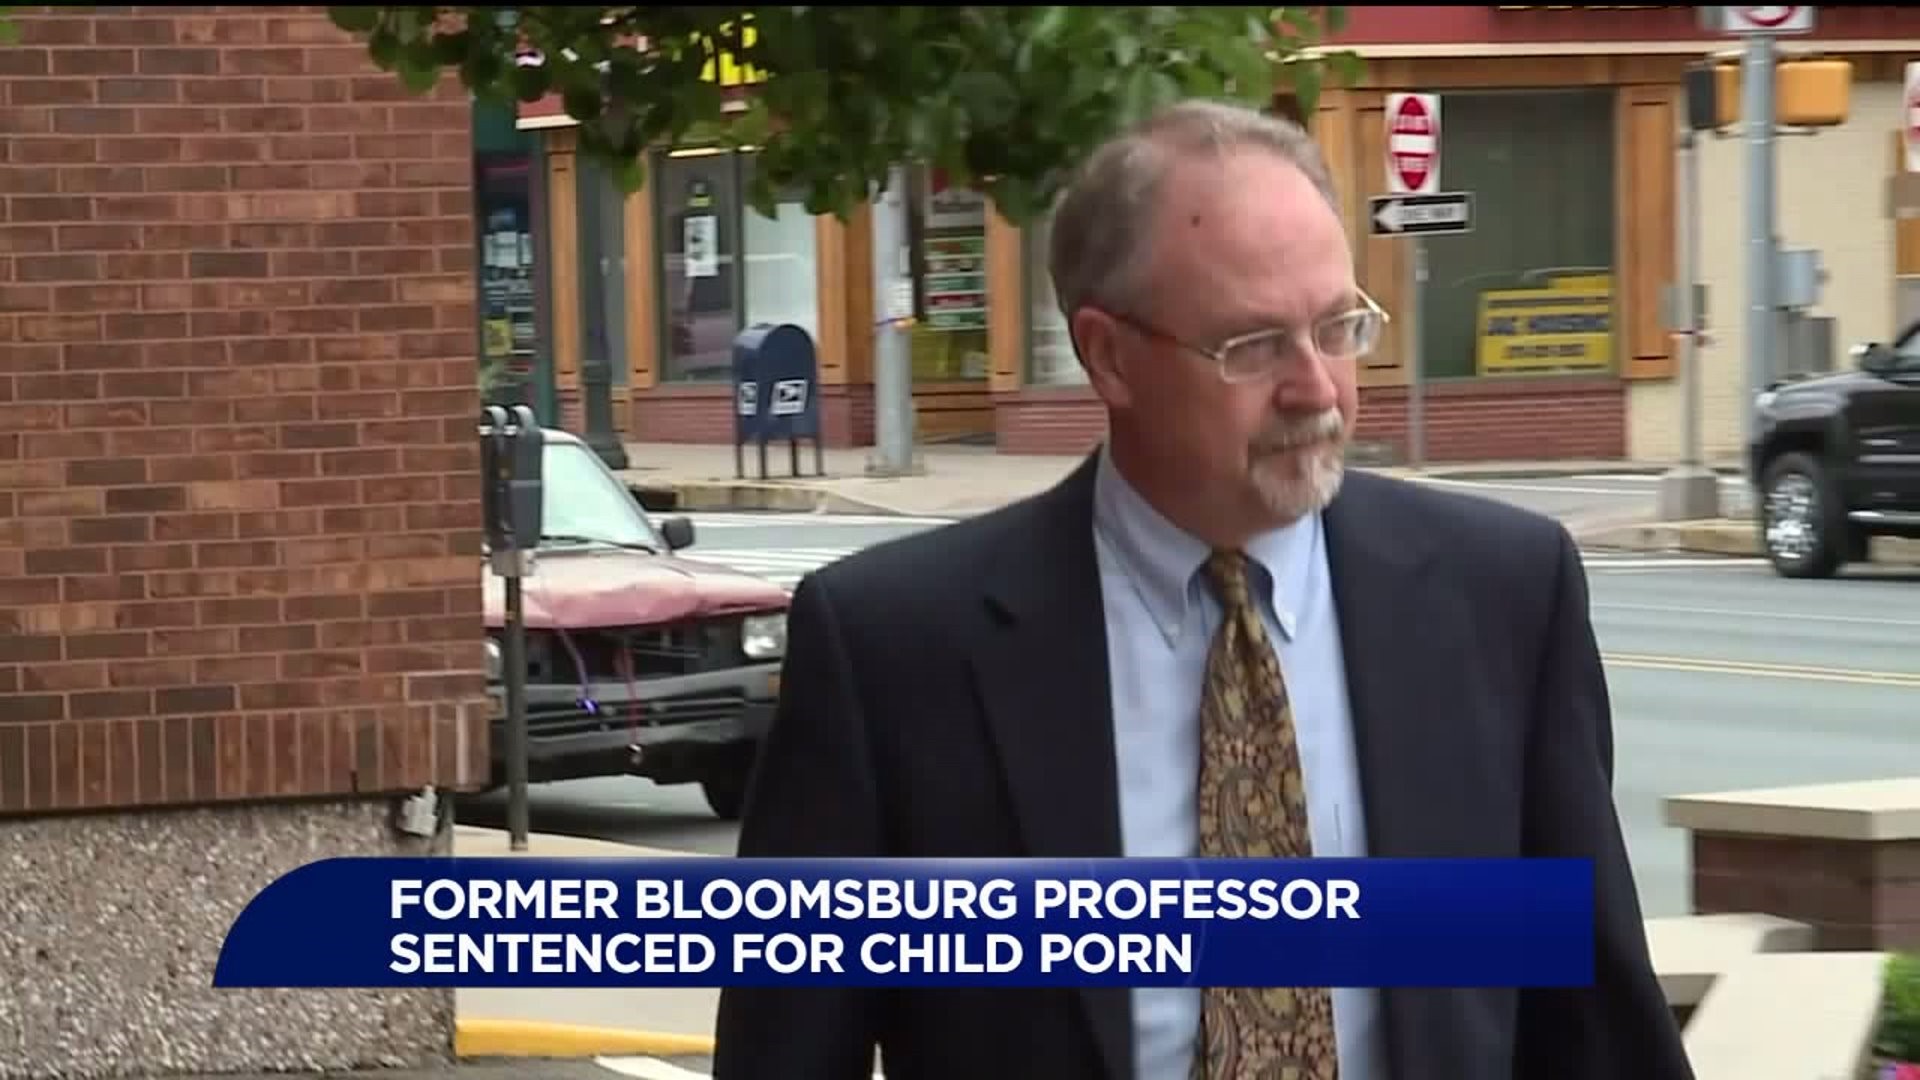 Former Bloomsburg University Professor Sentenced on Child Porn Charges